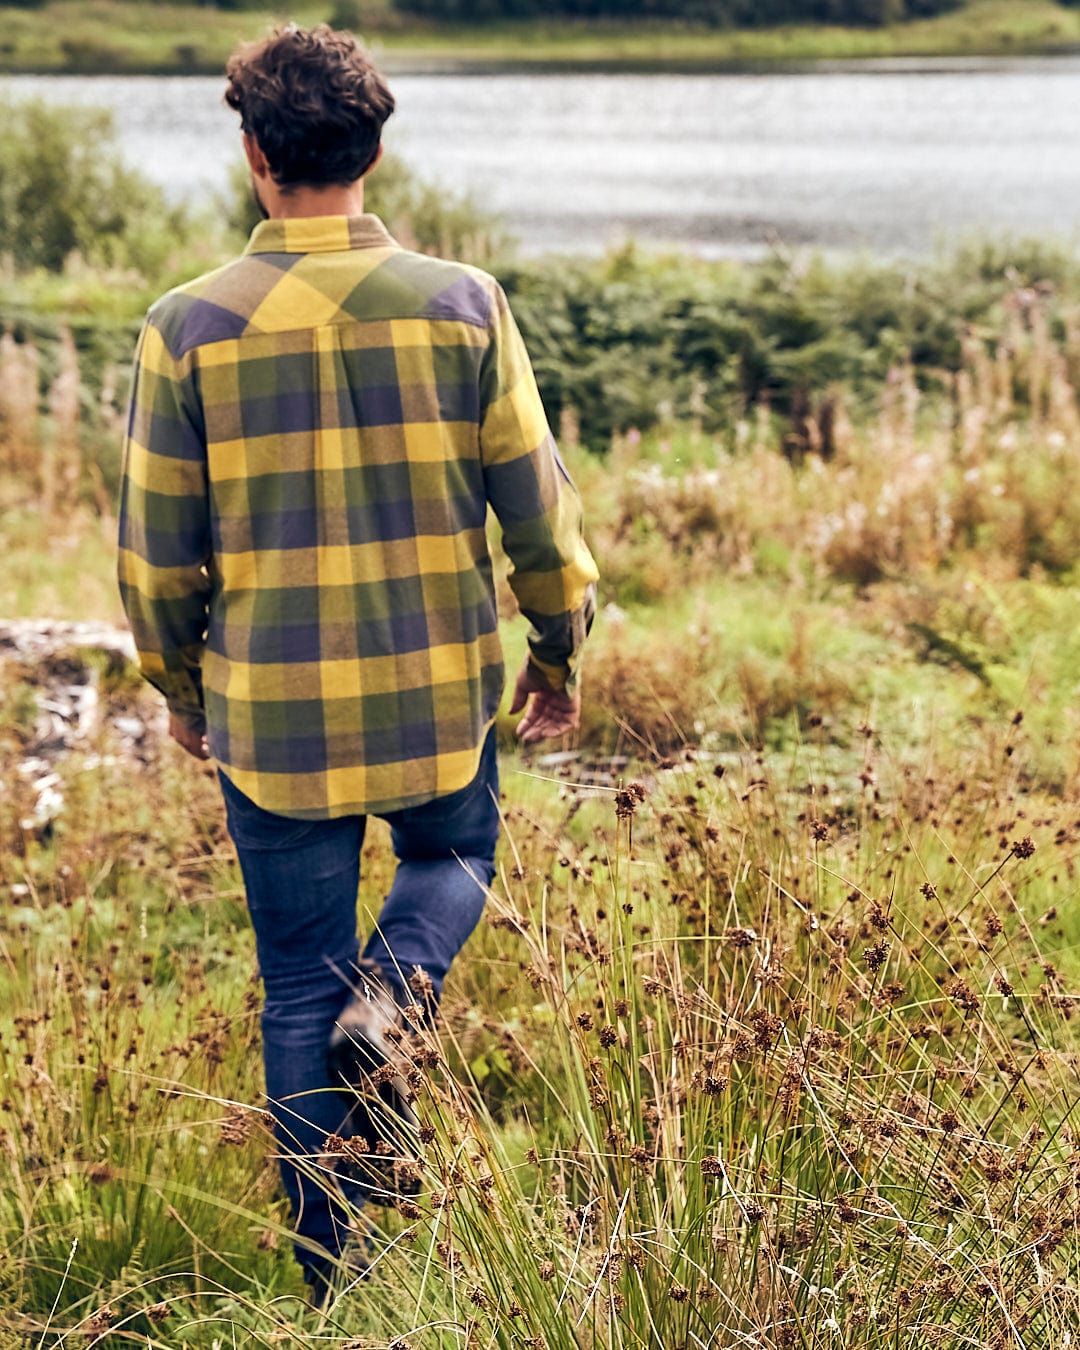 A man in a Saltrock Mattie - Mens Long Sleeve Shirt - Yellow walks through a field near a lake.